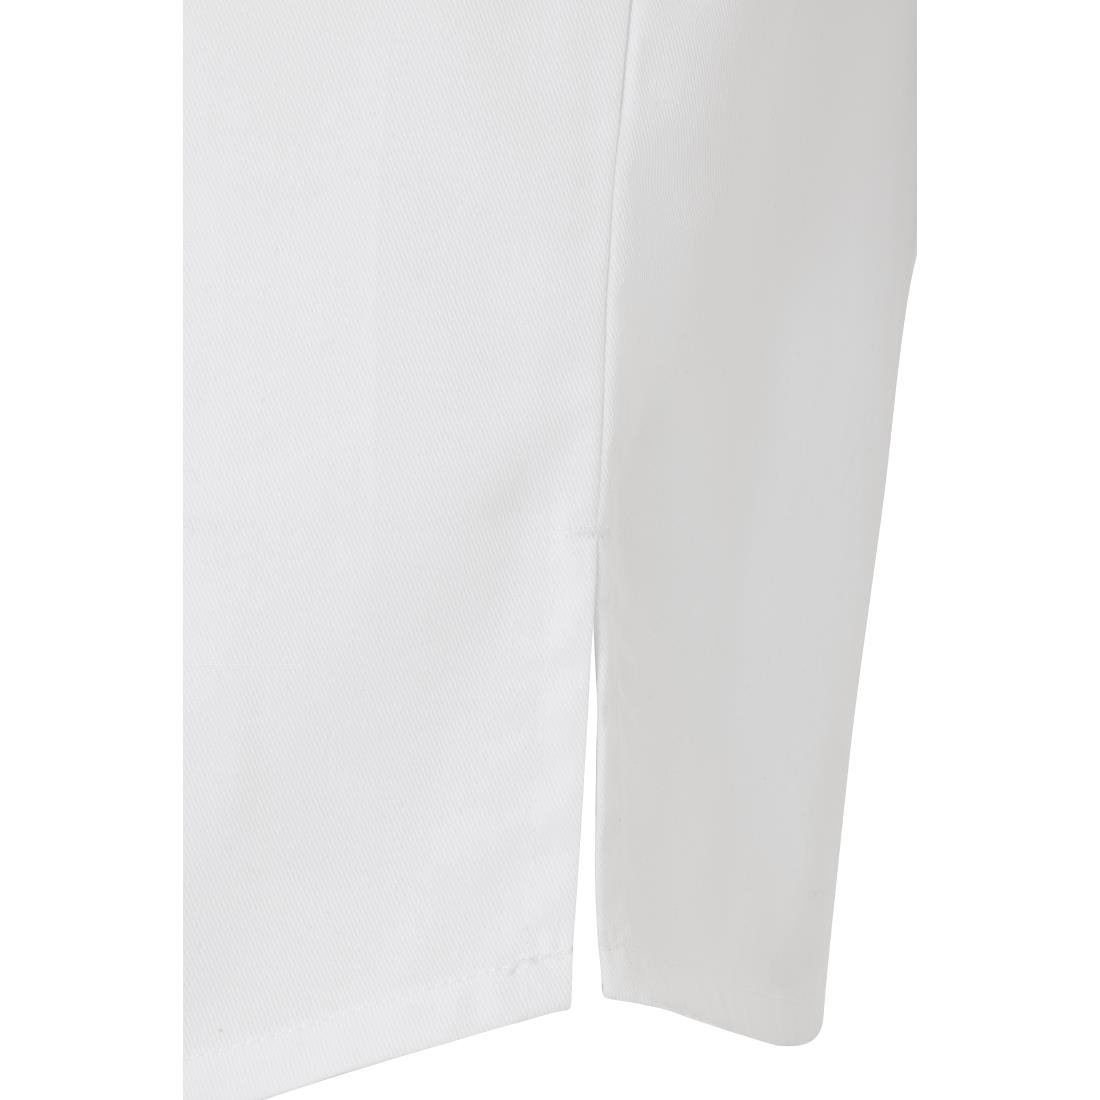 BA116-S Southside Harlem Chefs Jacket White Short Sleeve Mesh Size S